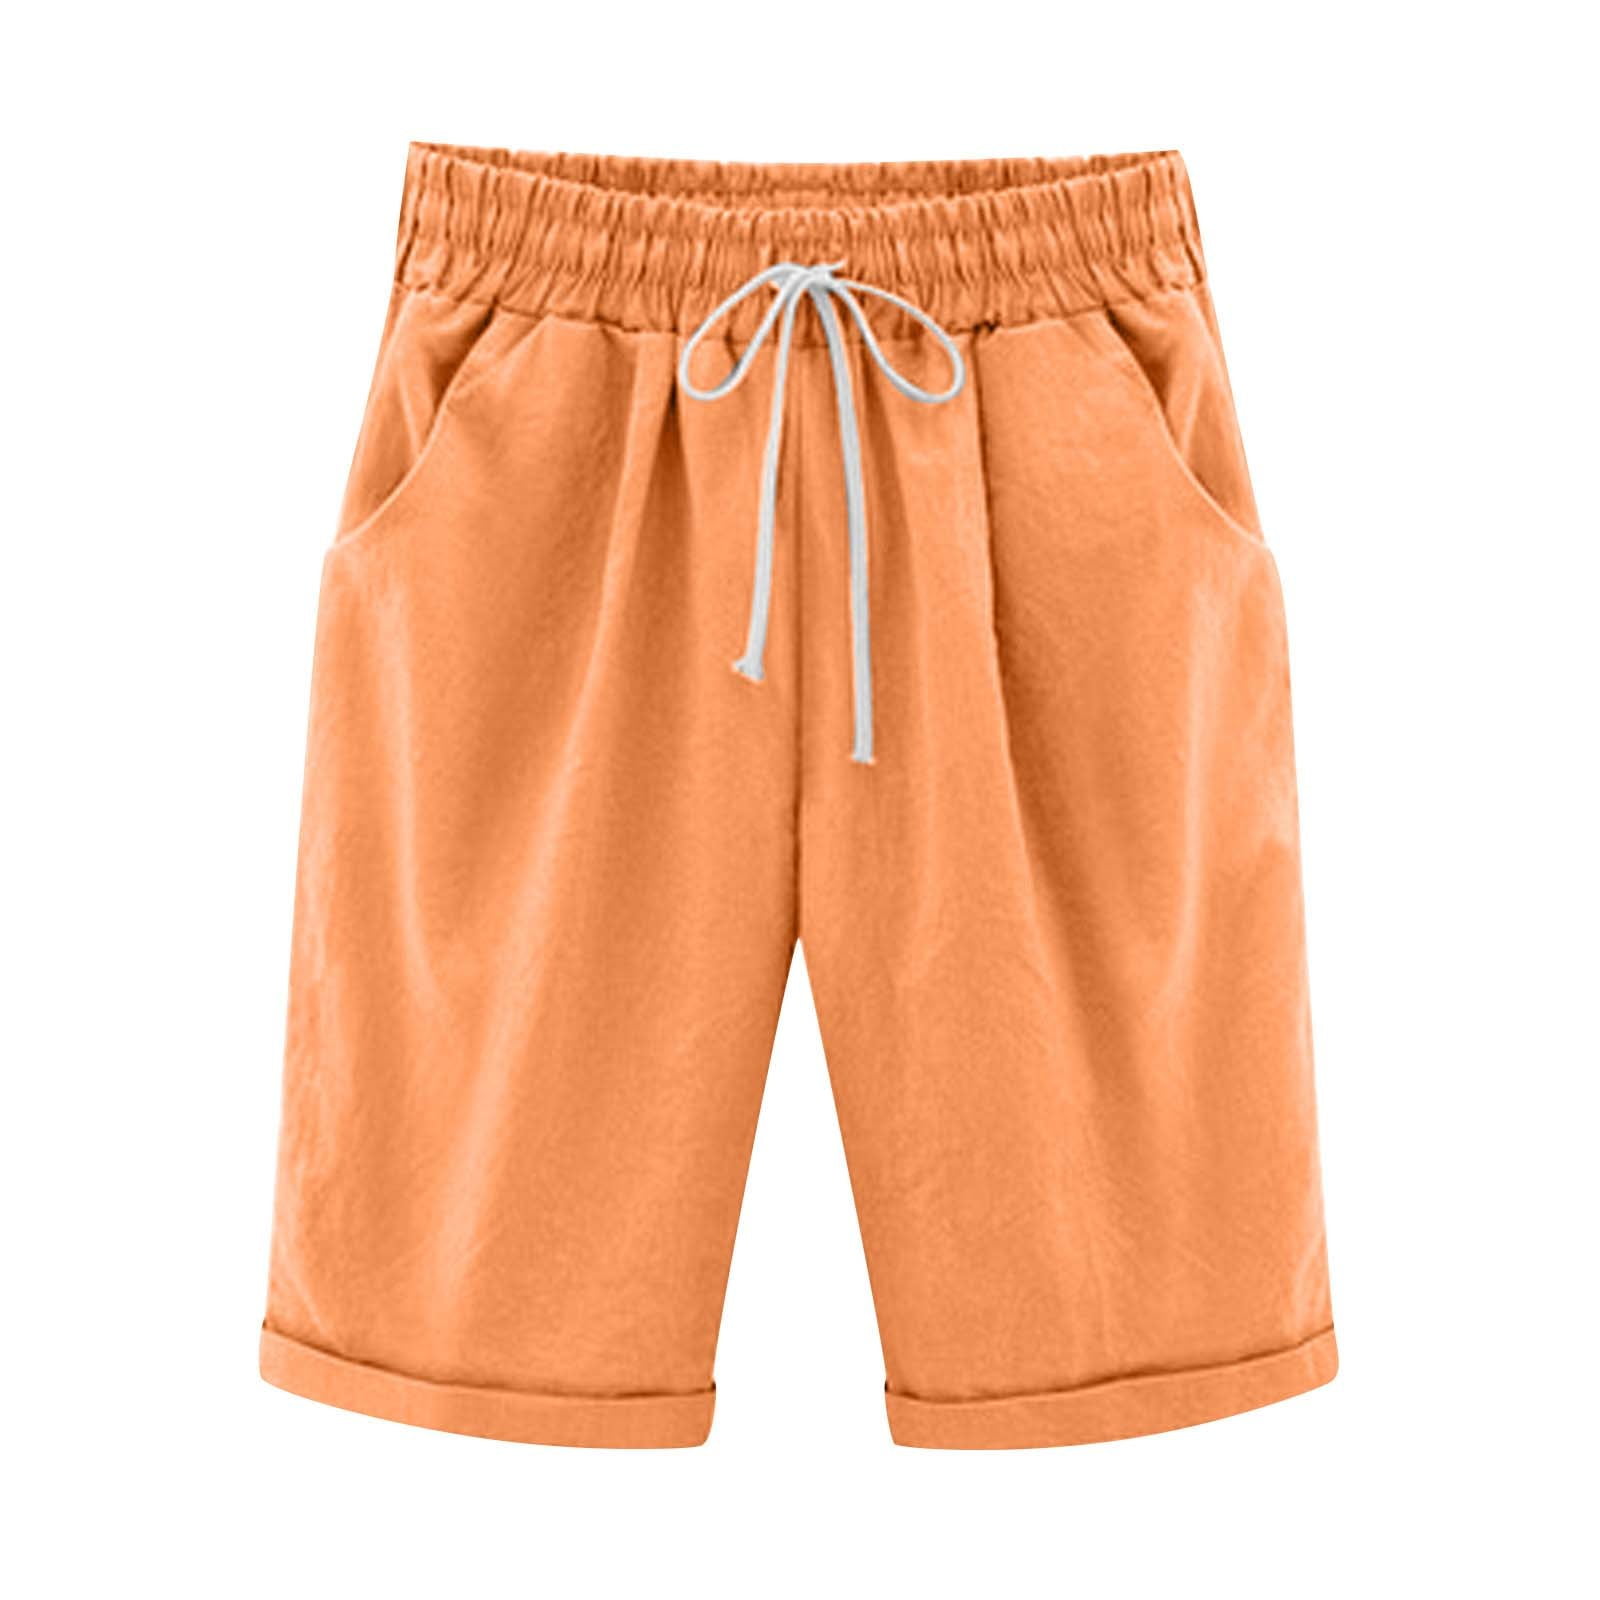 Plus Size Capri Pants for Women Summer Solid Elastic Waisted Drawstring ...